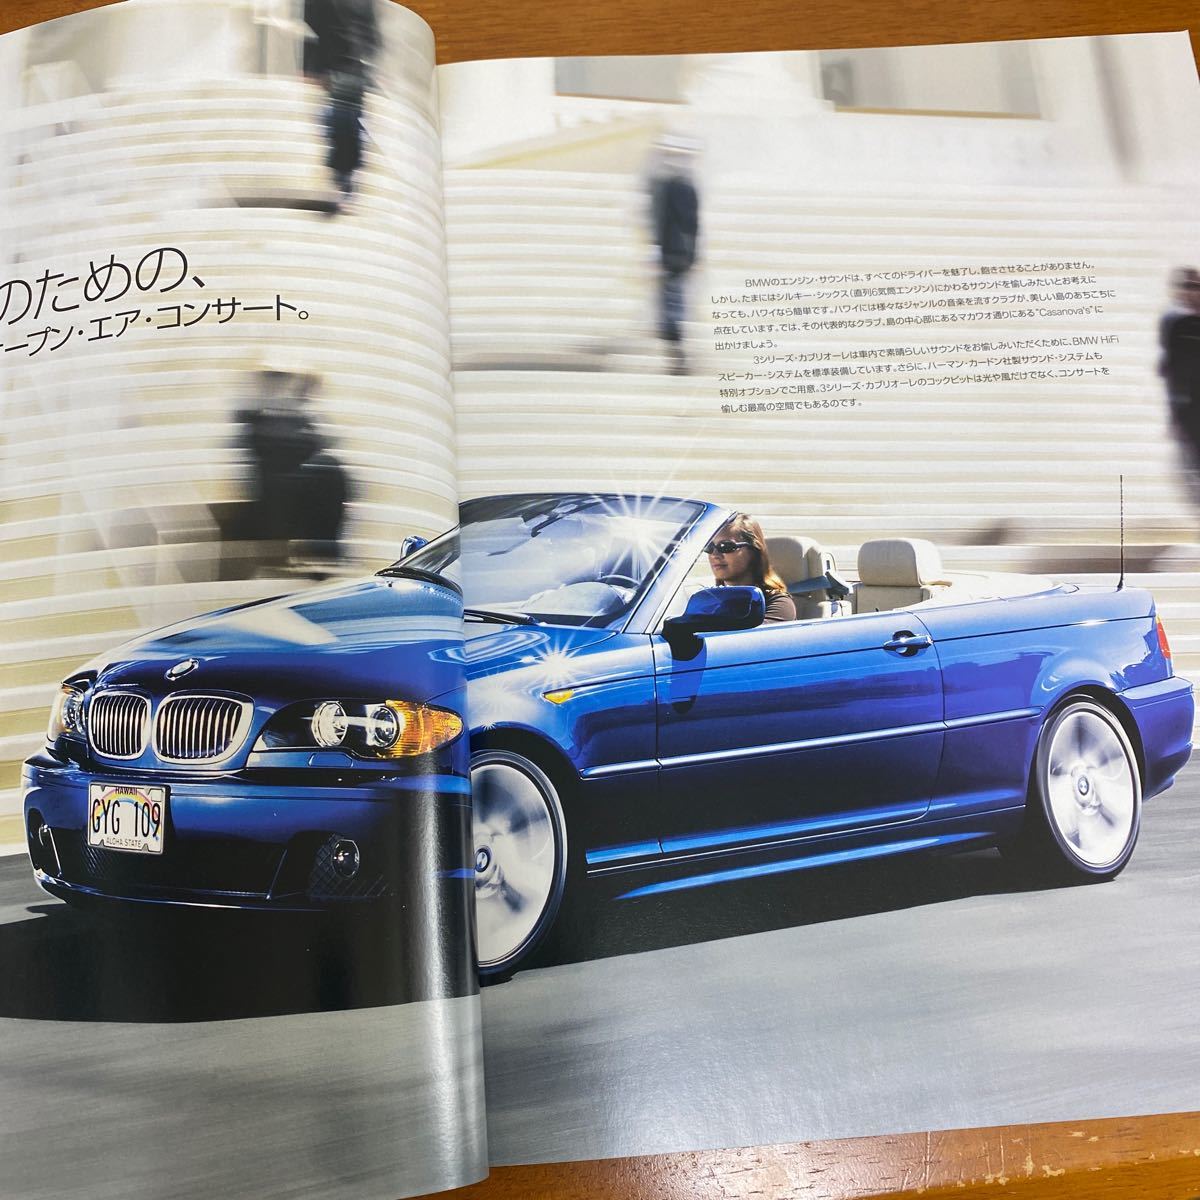 BMW 3 series cabriolet (BMW 330Ci cabriolet ) catalog * price & equipment list set (2003)